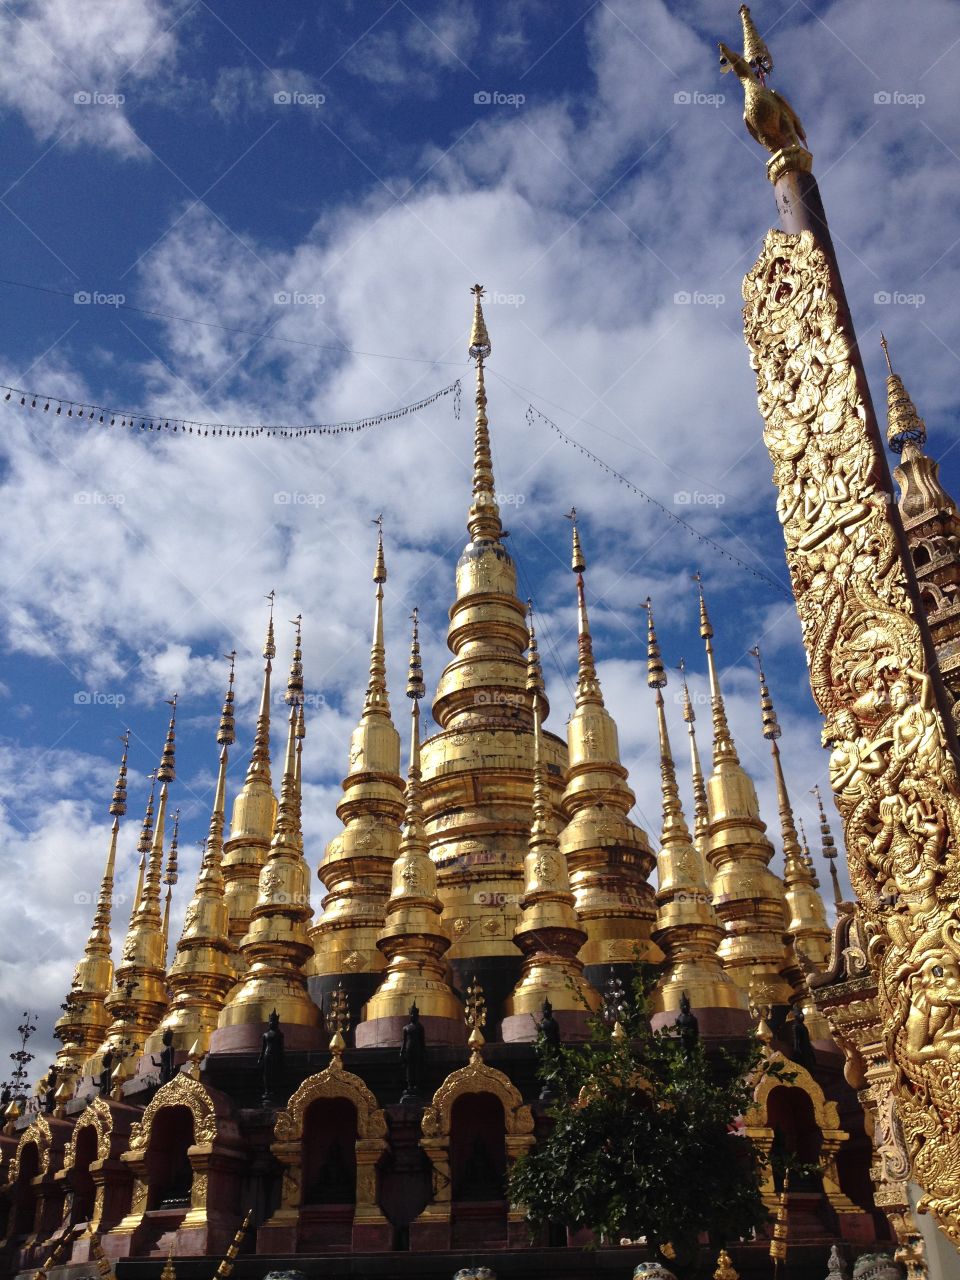 Wat Thai. Temple in Thailand